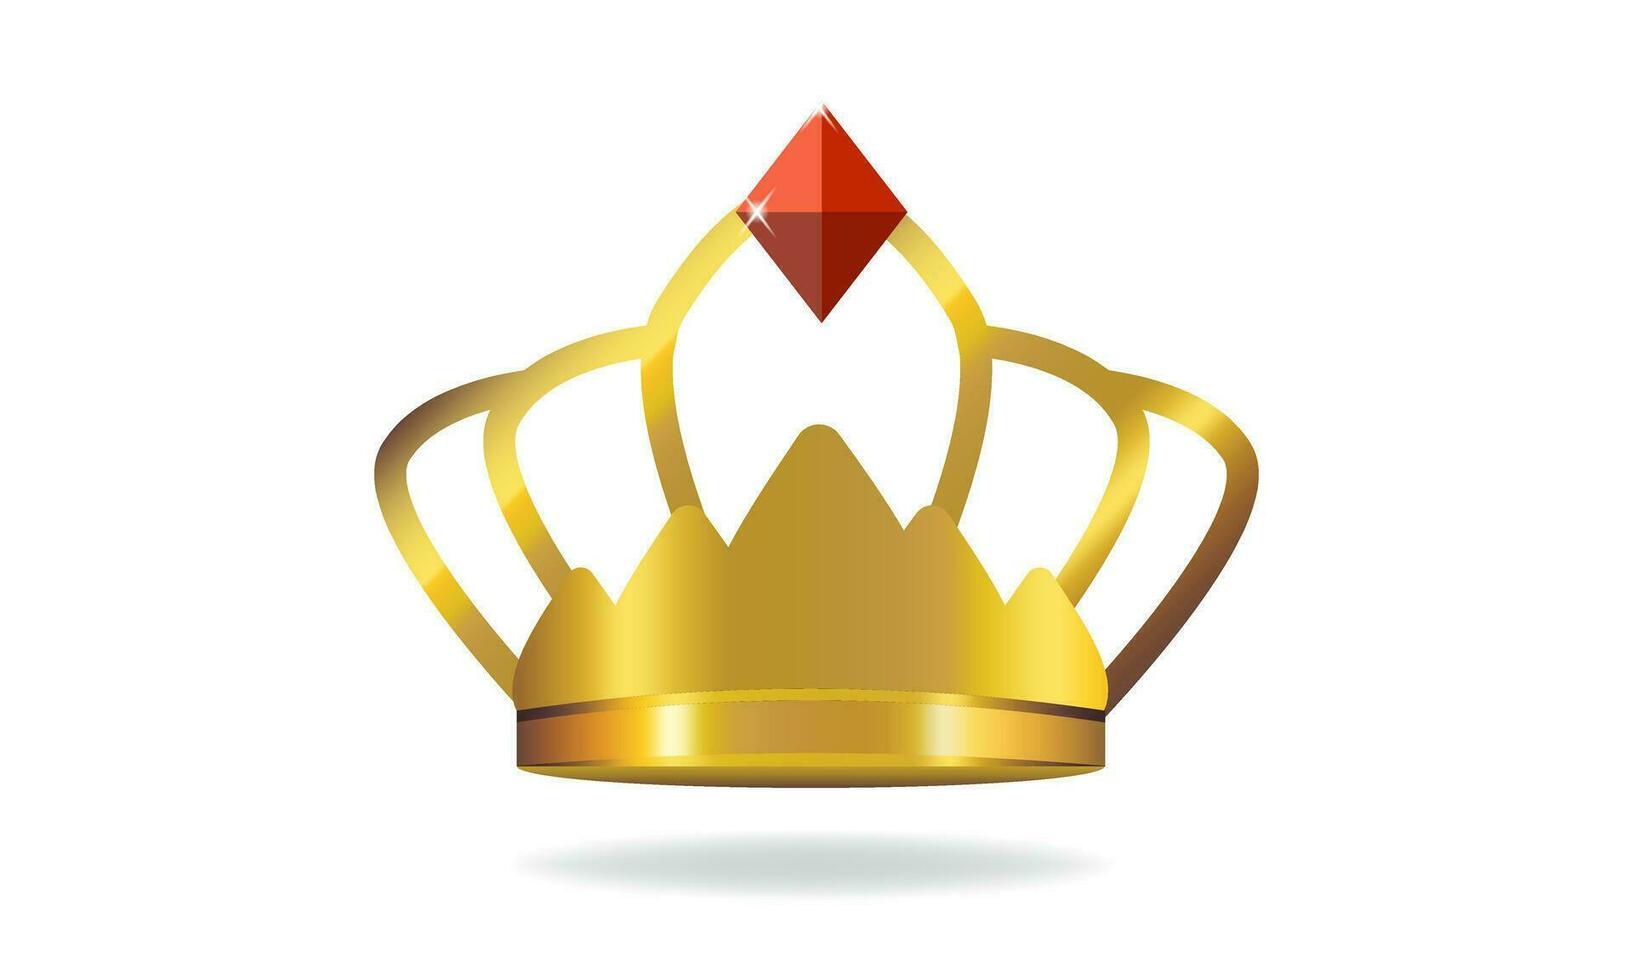 dorado real corona, degradado, 3d vector ilustración